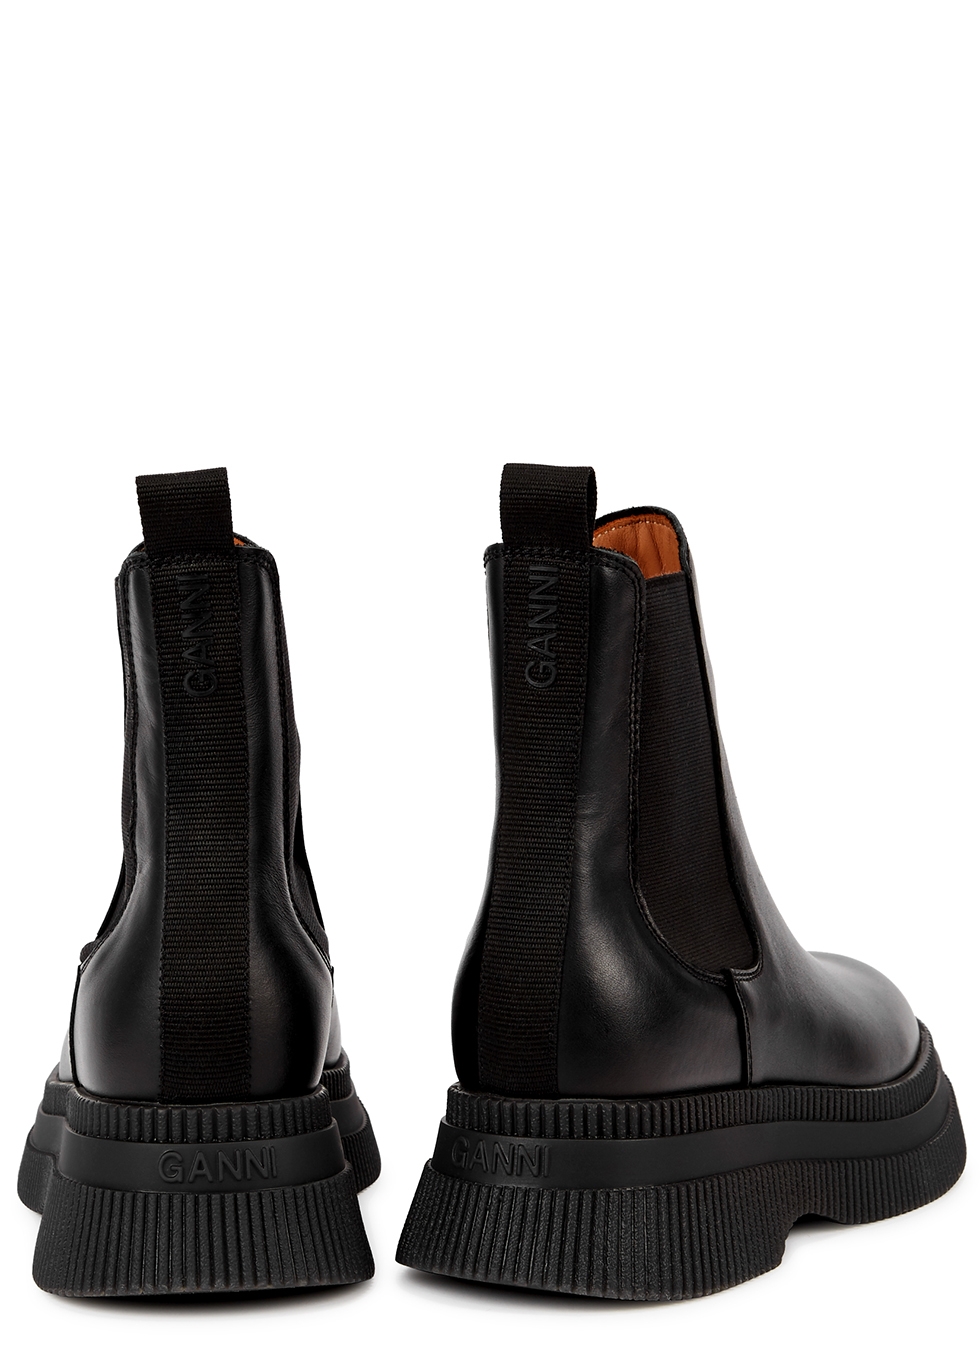 Ganni Black leather Chelsea boots - Harvey Nichols